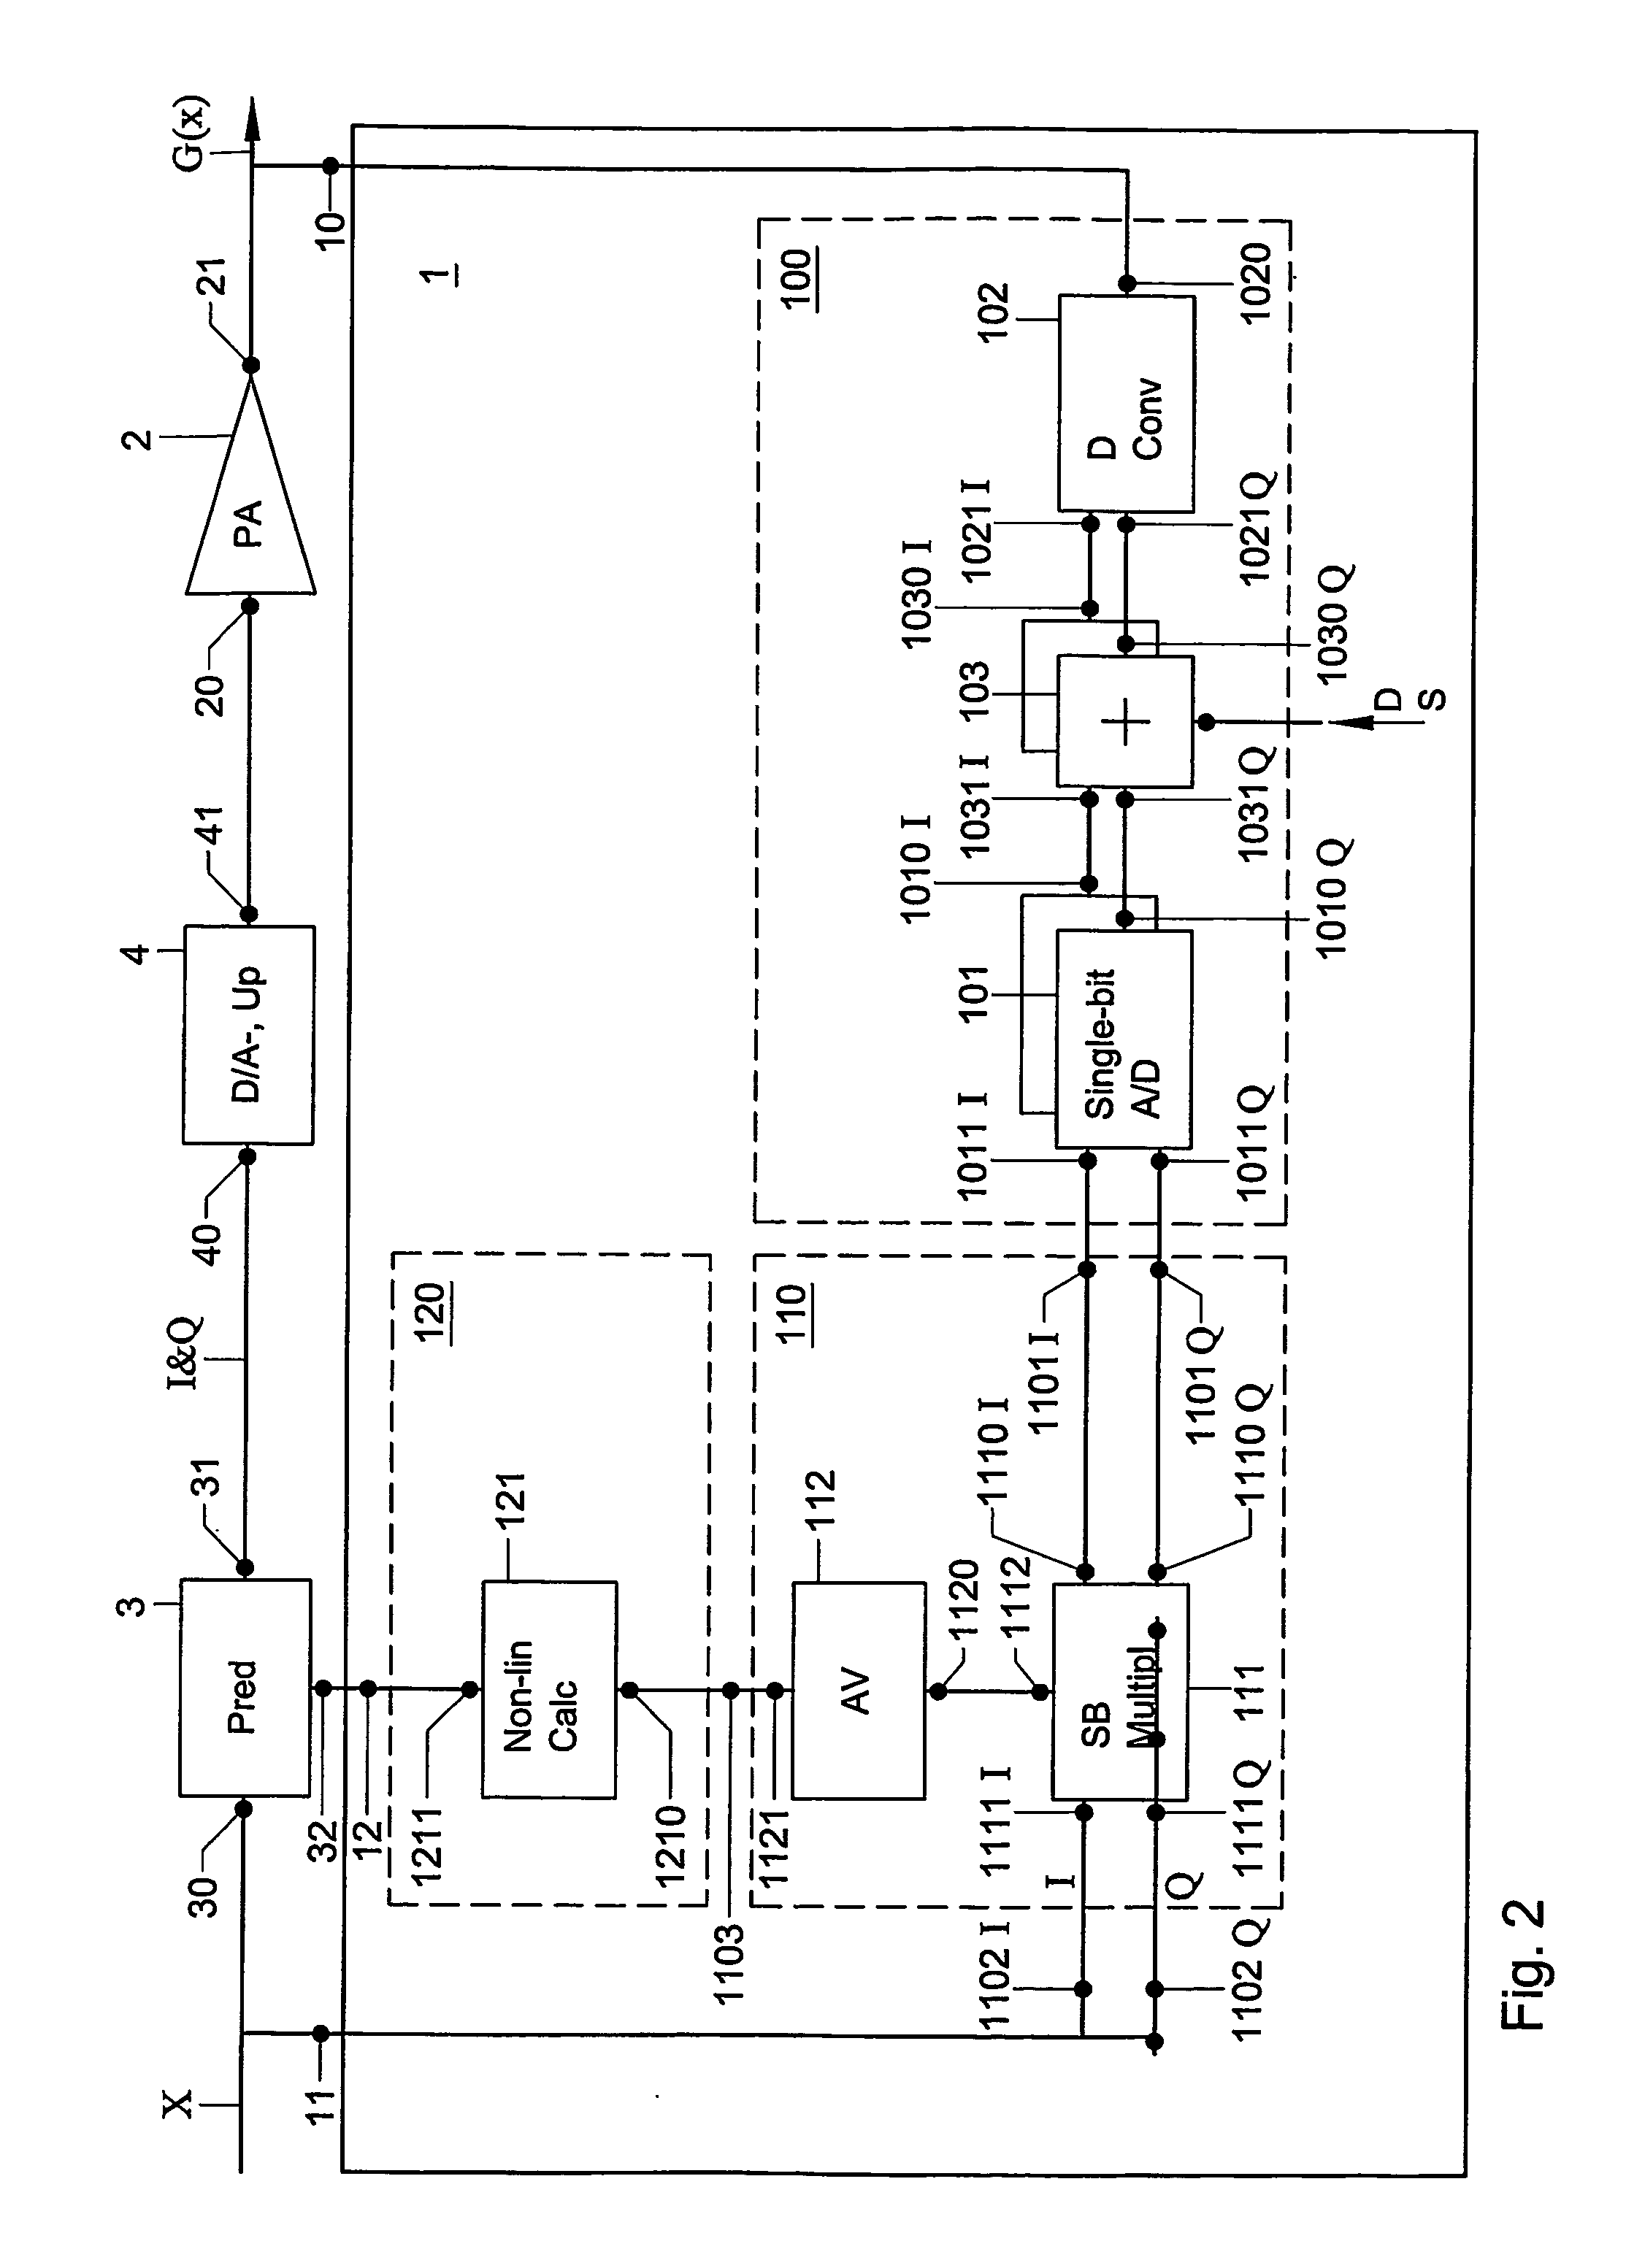 Predistortion control device and method, assembly including a predistortion control device